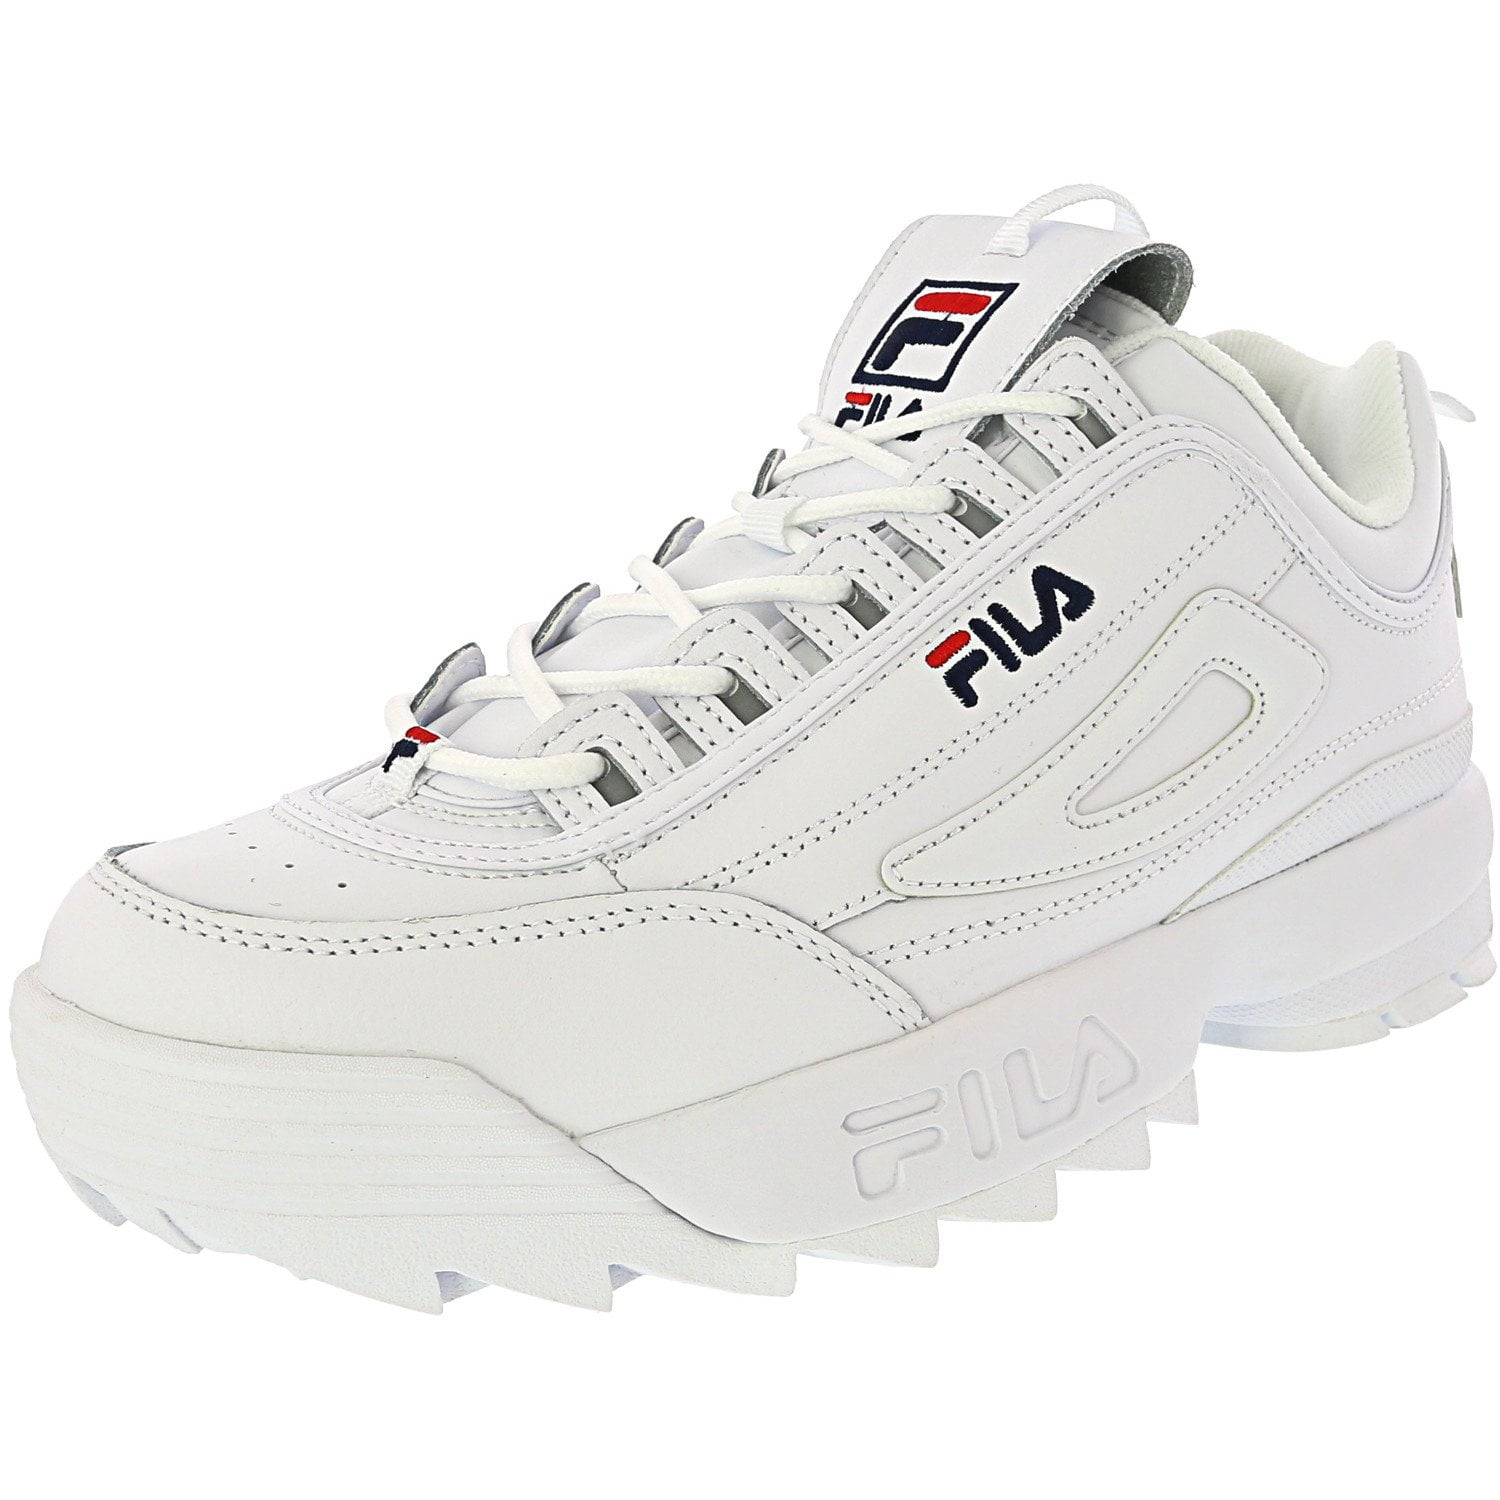 Fila Men's Disruptor Preium White Navy Red Ankle-High Leather Sneaker - 9.5M - Walmart.com